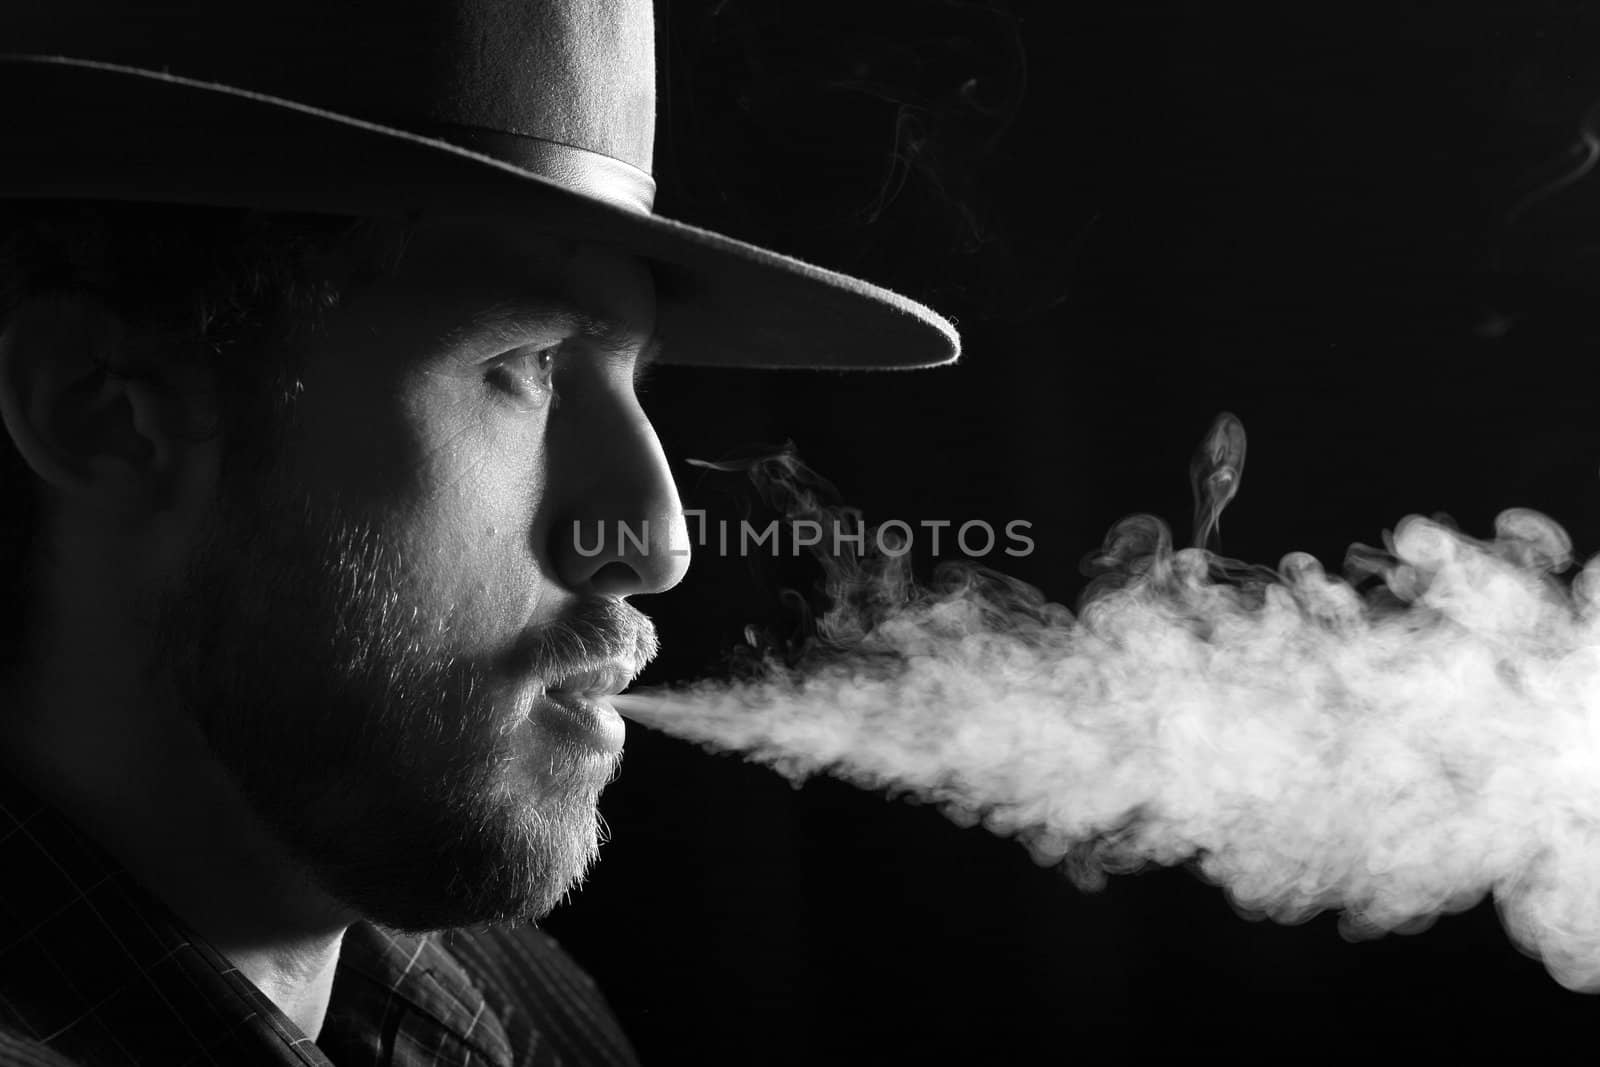 An image of a smoking man on dark background